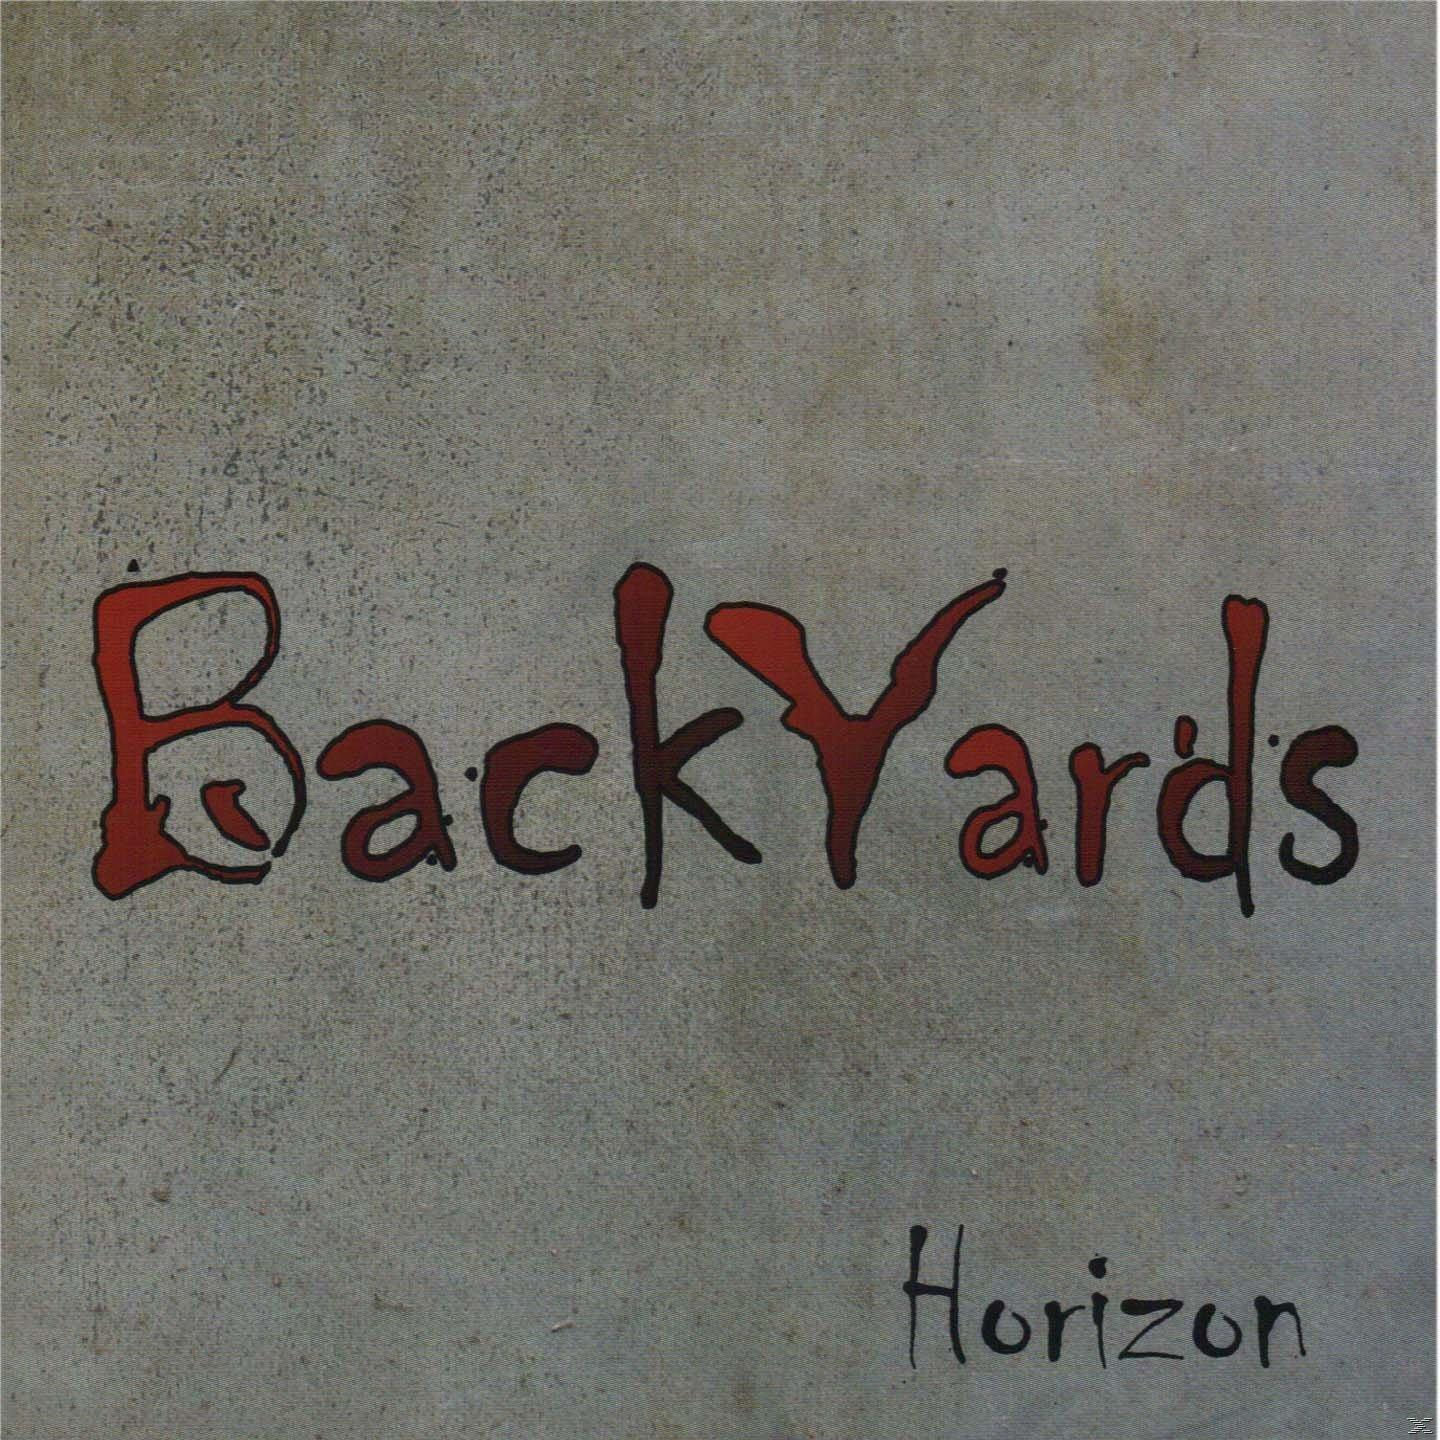 (CD) Backyards Horizon - -